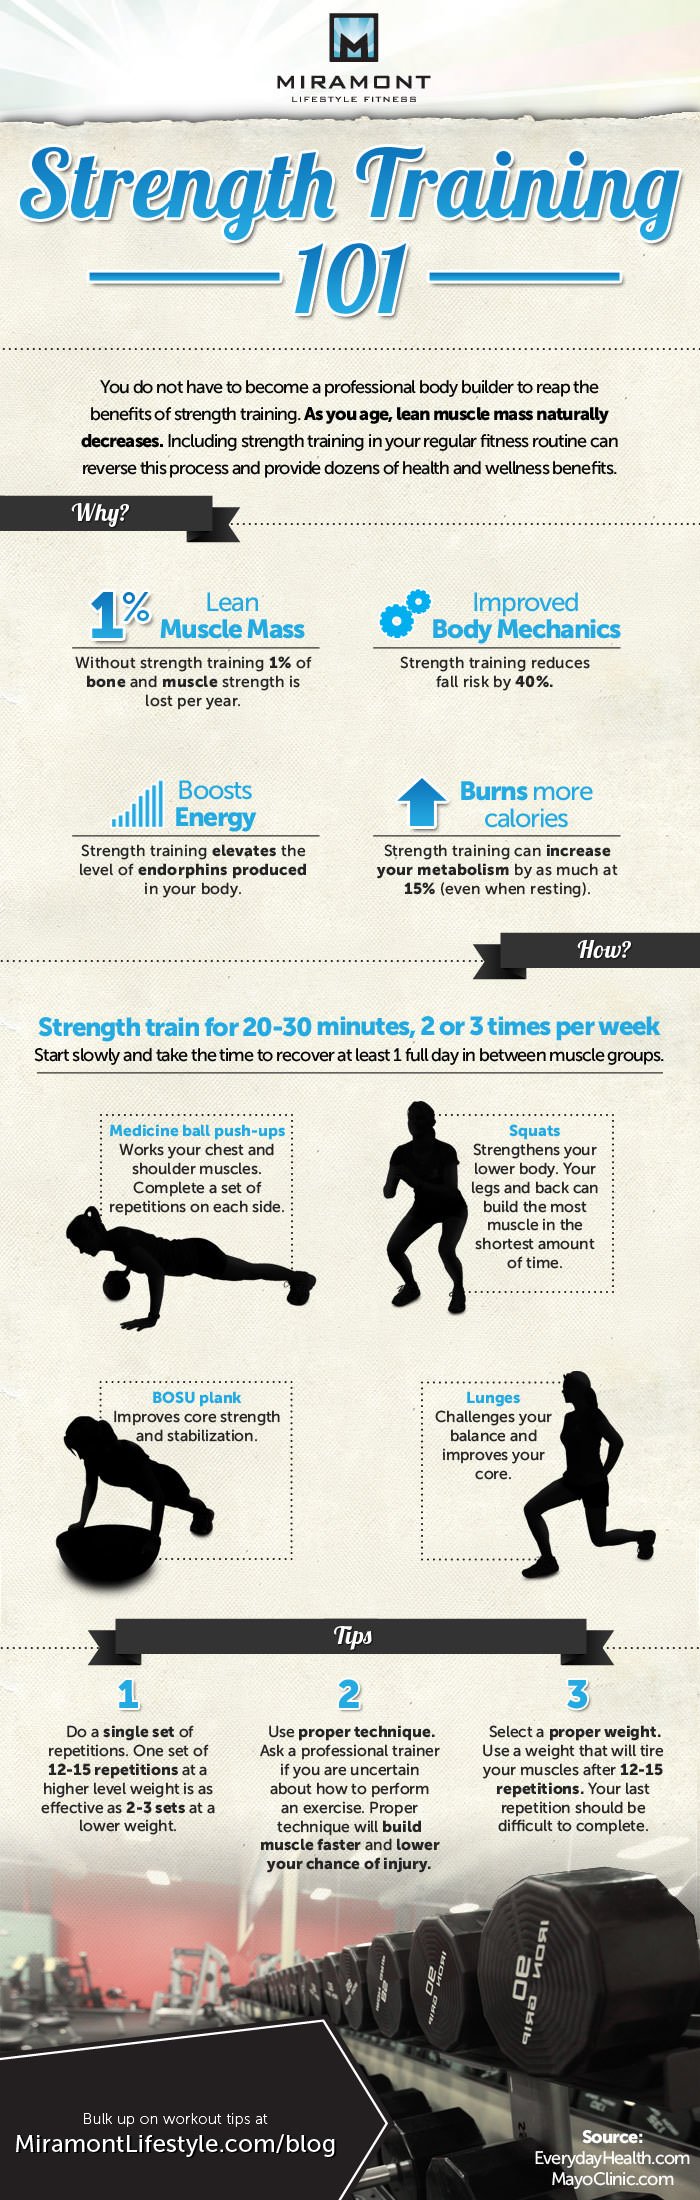 Strength Training Infographic